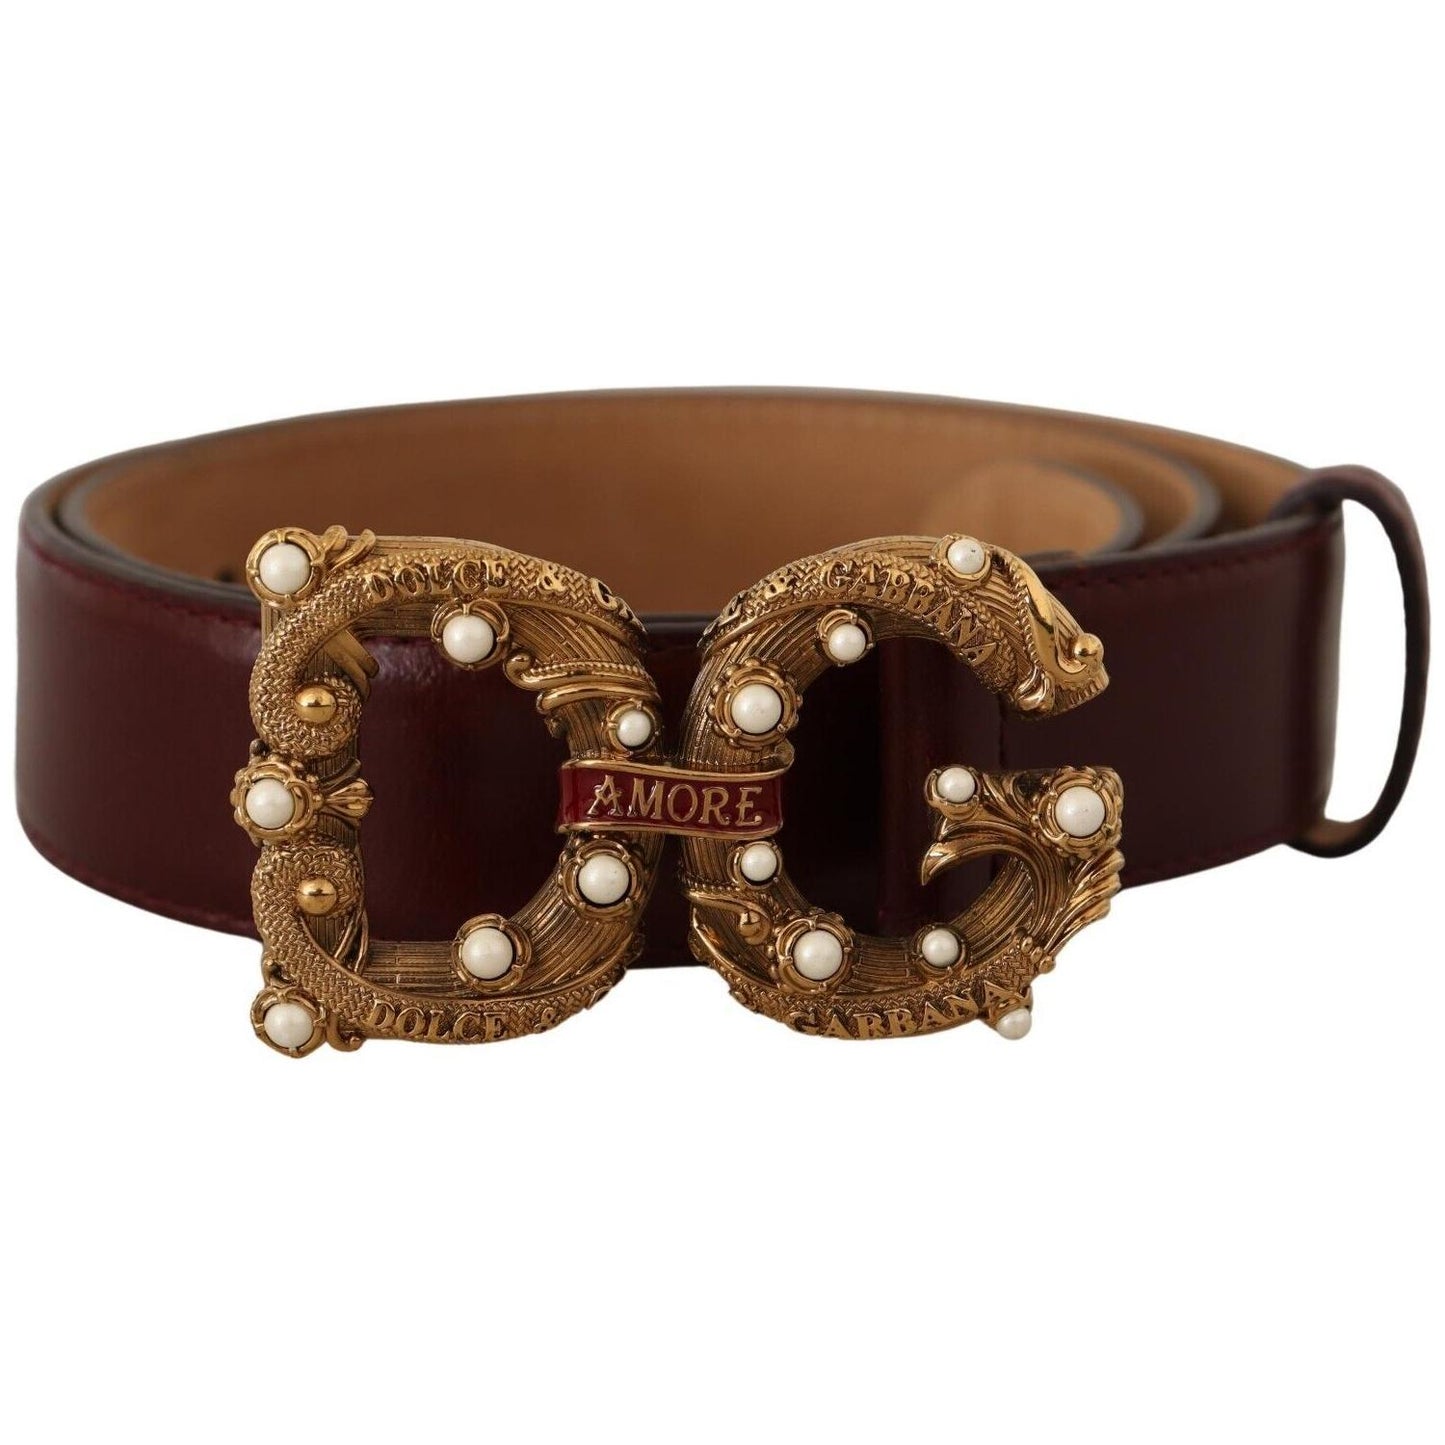 Dolce & Gabbana Elegant Bordeaux Leather Amore Belt bordeaux-leather-brass-logo-buckle-baroque-amore-belt s-l1600-2-270-69f026b4-039.jpg